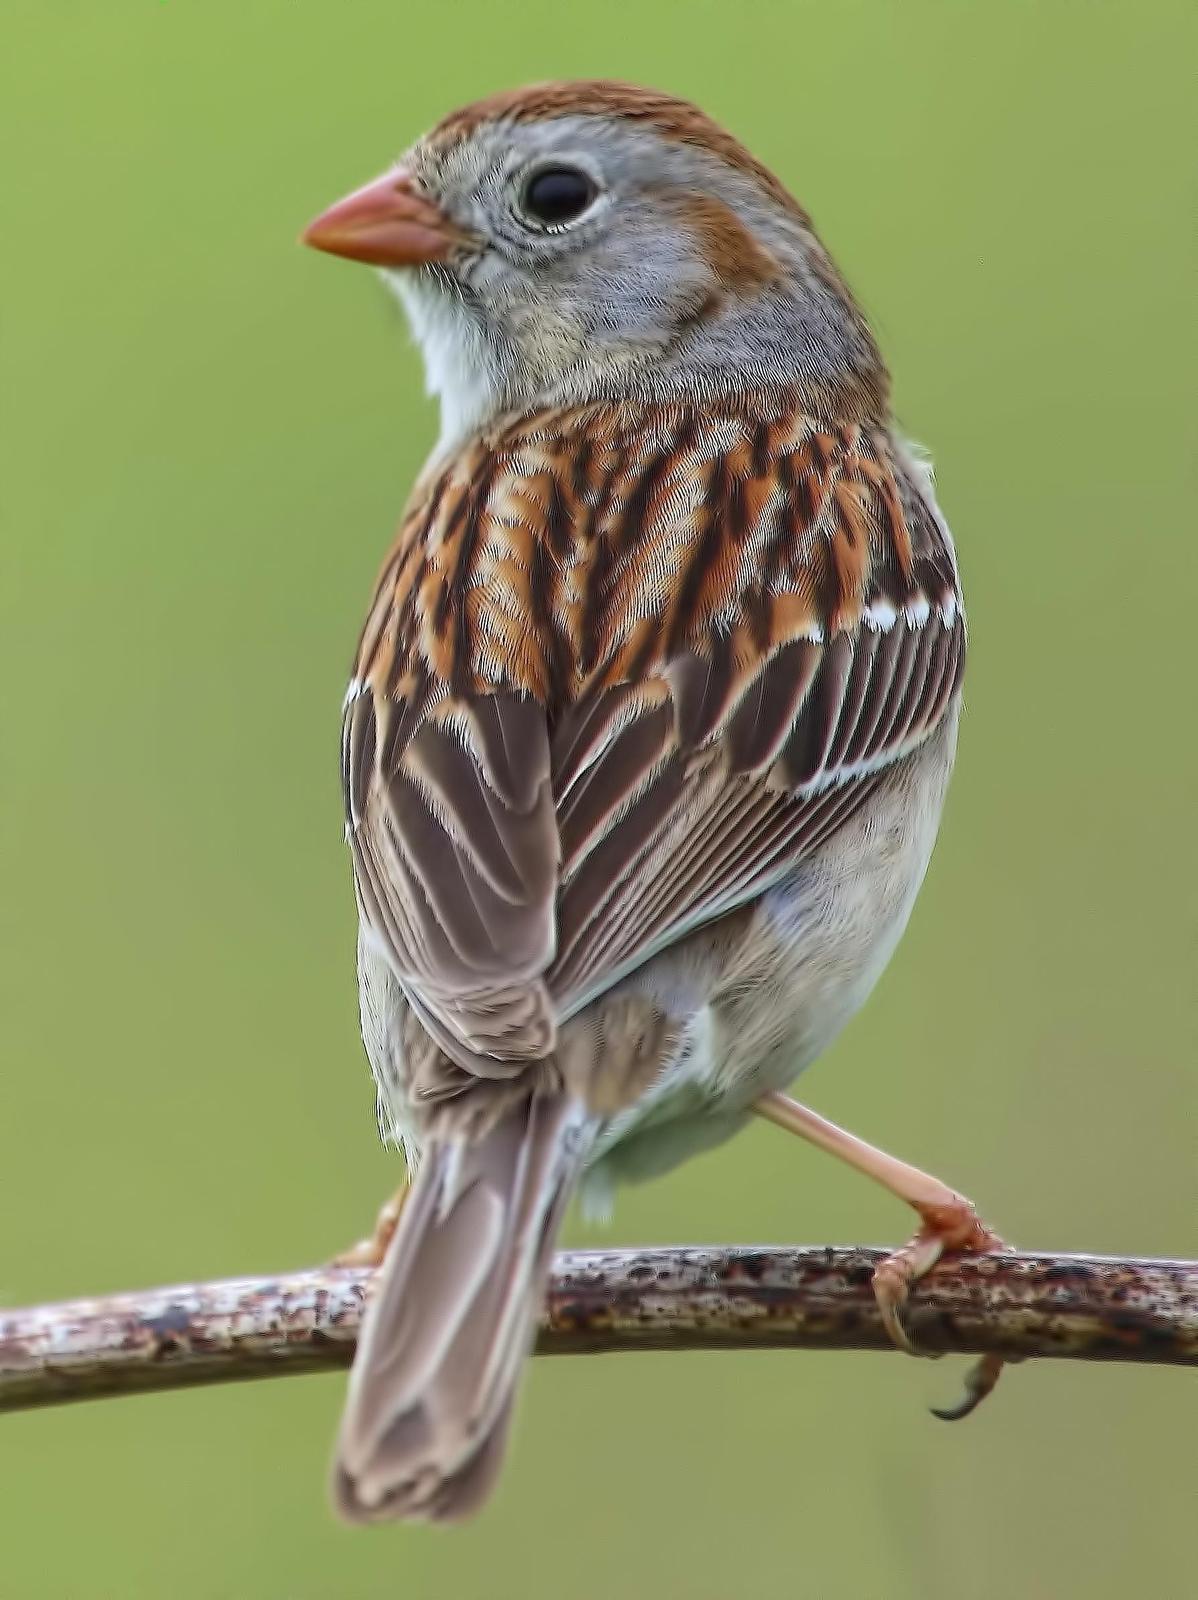 Field Sparrow Photo by Dan Tallman